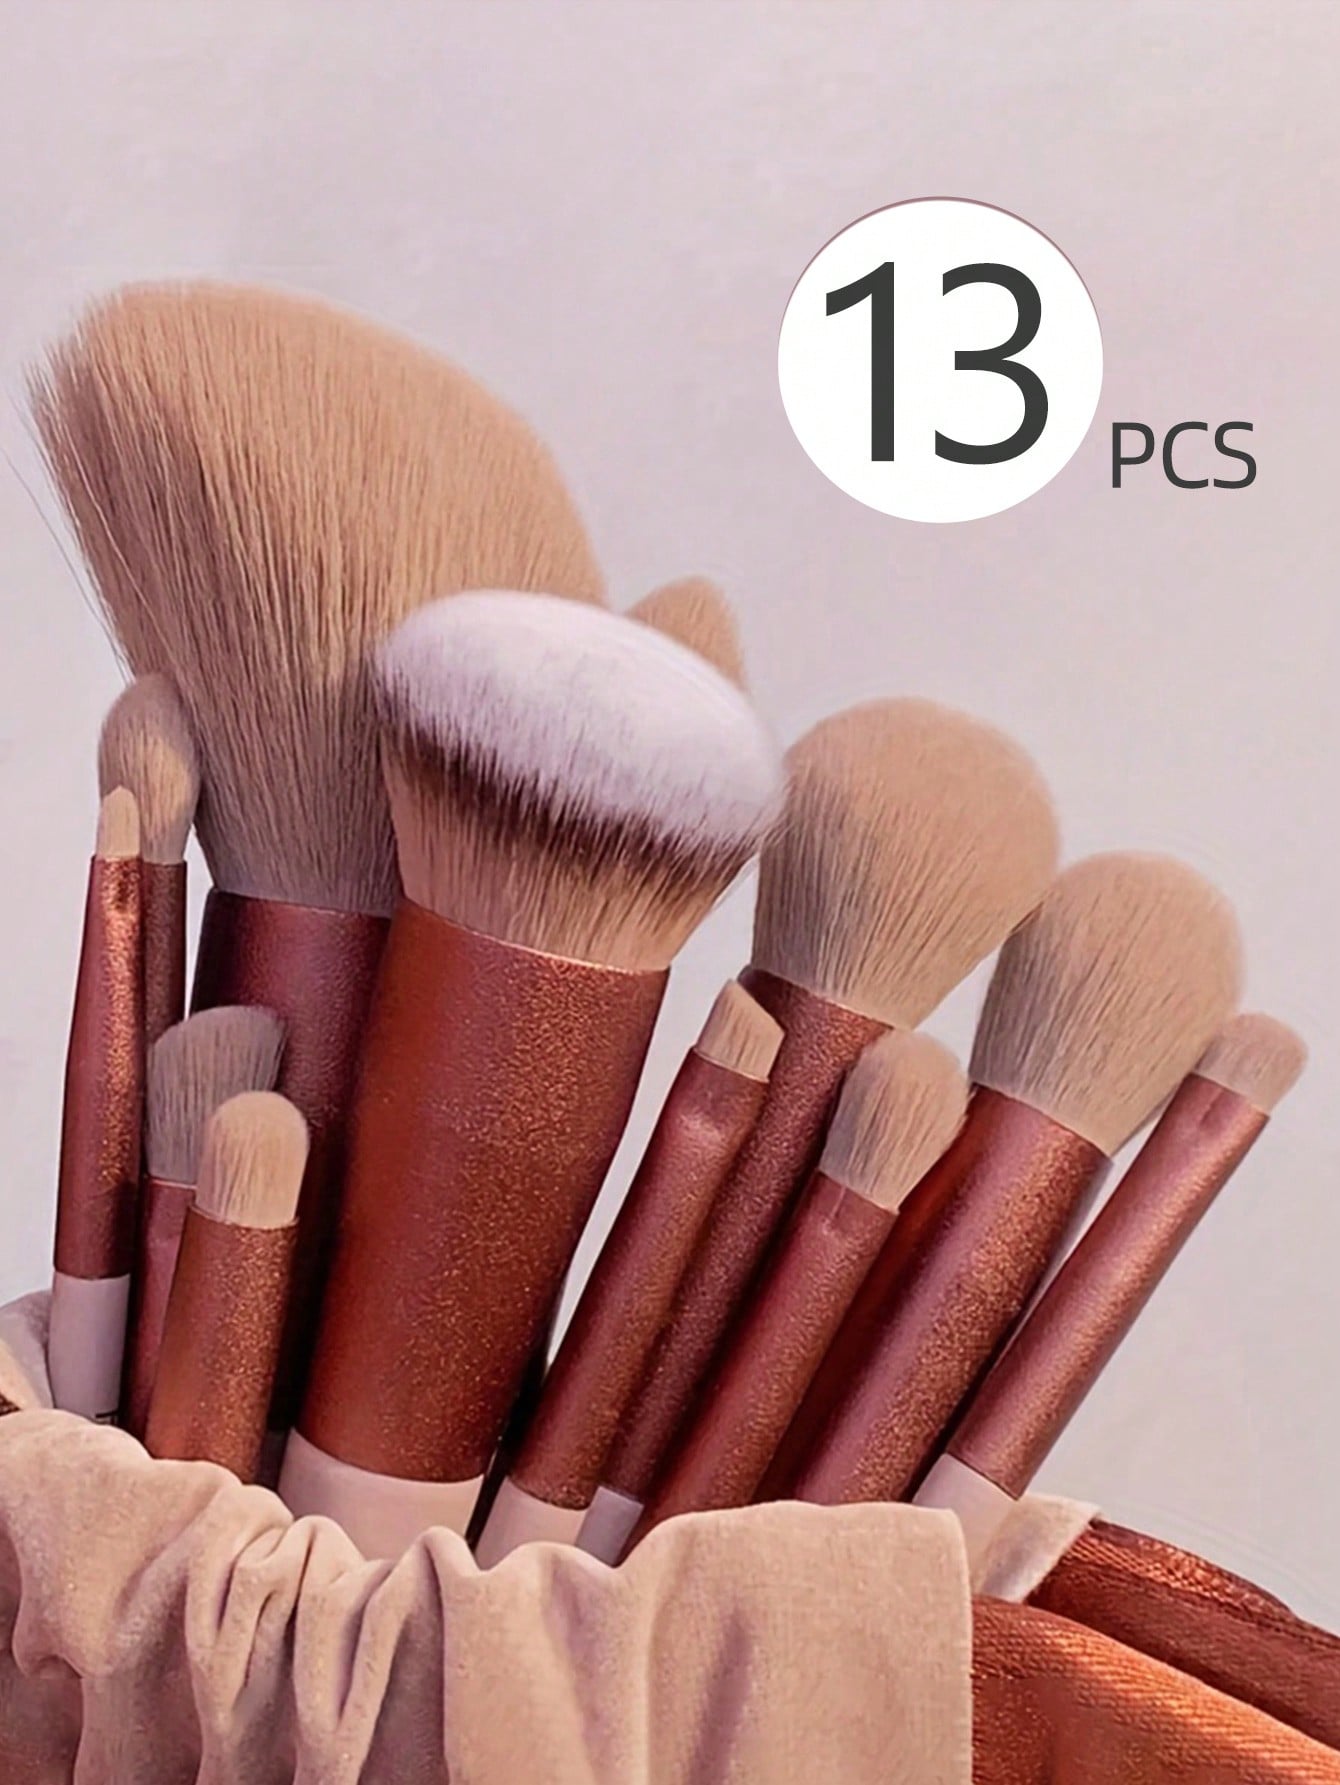 13Pcs Portable Makeup Brush Set For Blush, Makeup Brushes Set,Eyeshadow Cosmetic Brush Set Blush Brush Makeup Tools,Maillard,Essential For Home,Travel Size,Easy To Store,Clothing Matching - Negative Apparel